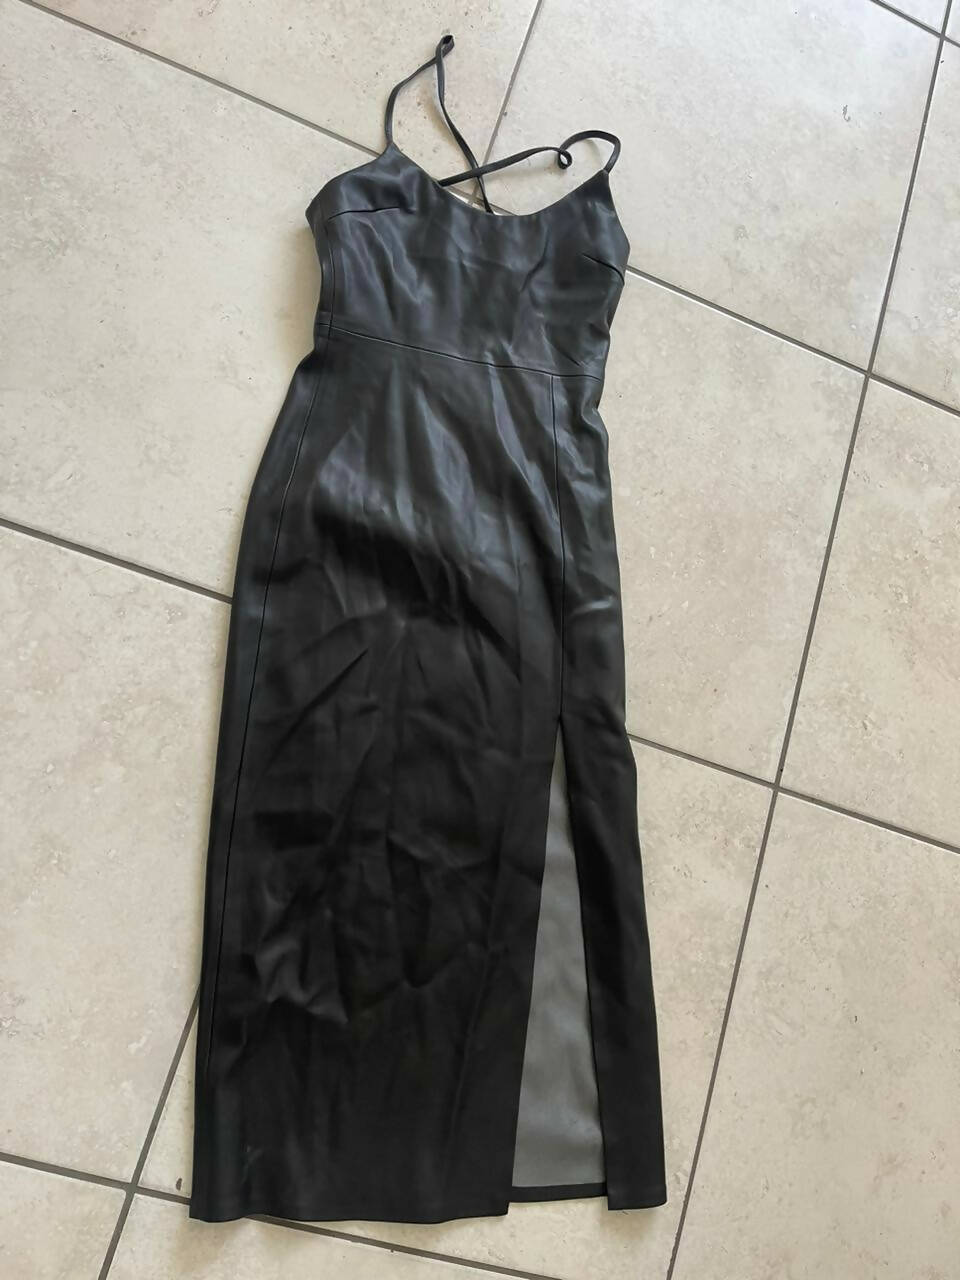 Image of Black Dress